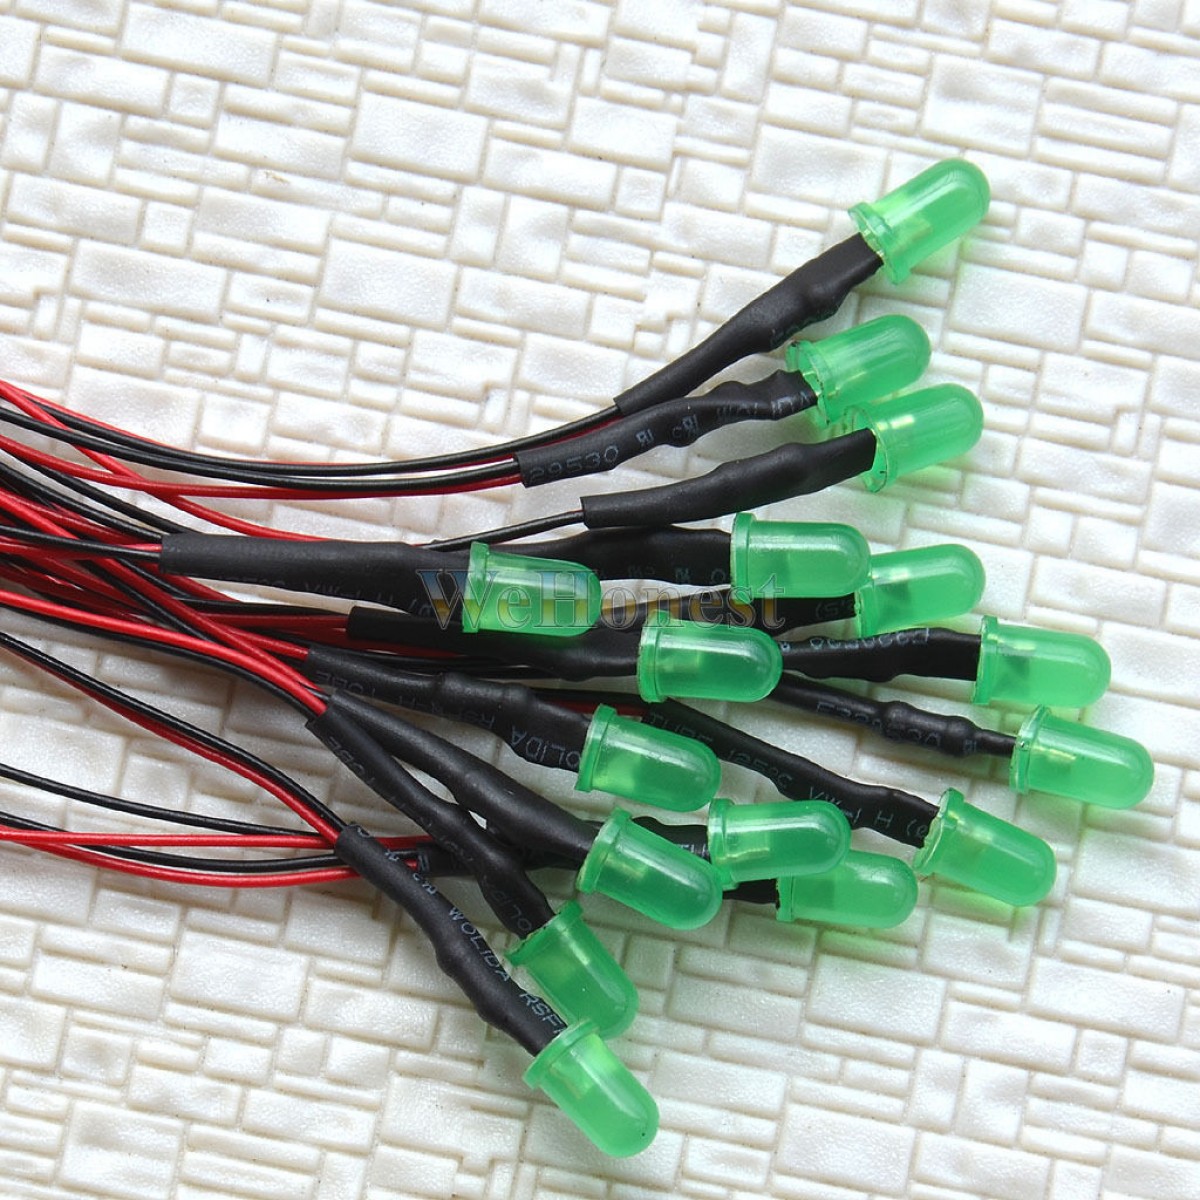 5 x Pre-Wired Dia.5mm Green LEDs prewired resistor for 12V - 16V use